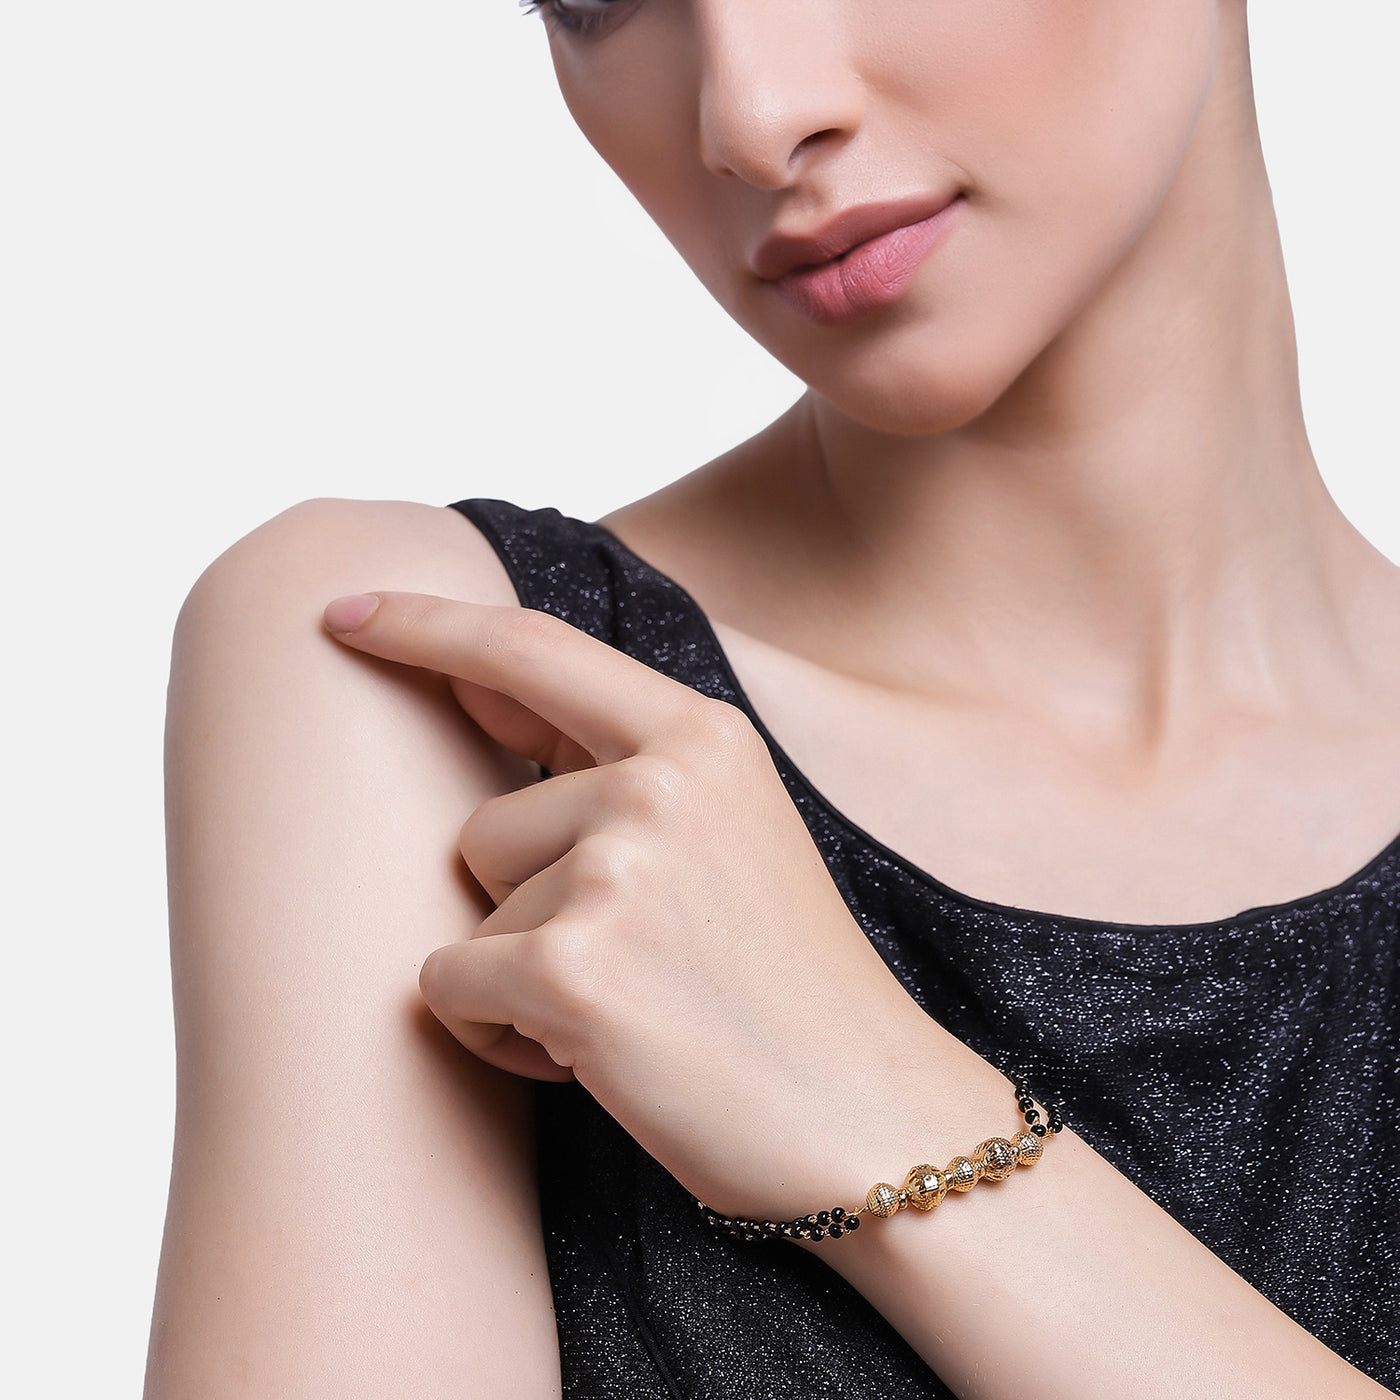 Estele Gold Plated Macrame Bracelet with Black Beads for Women